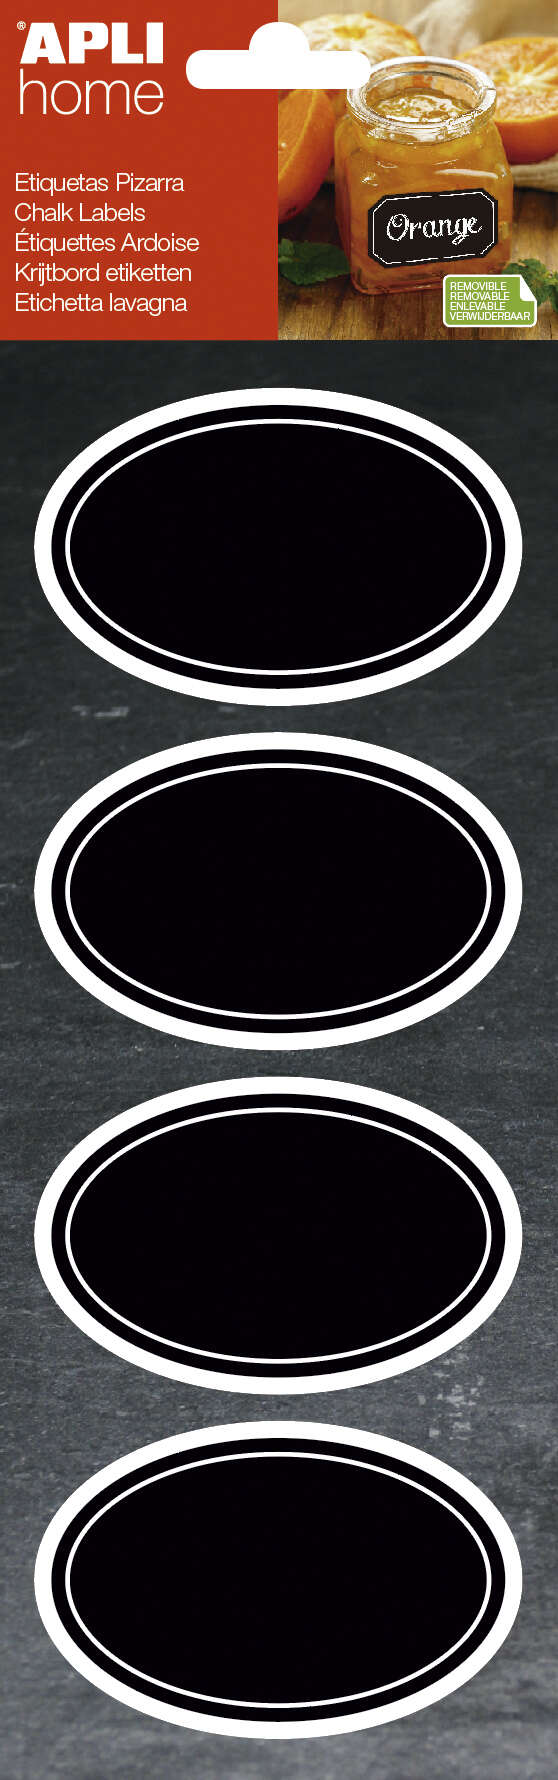 Apli Etiquetas Pizarra Ovaladas 80X50Mm - Adhesivo Removible - 2 Hojas (8 Etiquetas) - Tiza Liquida O Convencional - Borrado Facil - Rotuladores Permanentes - Color Negro